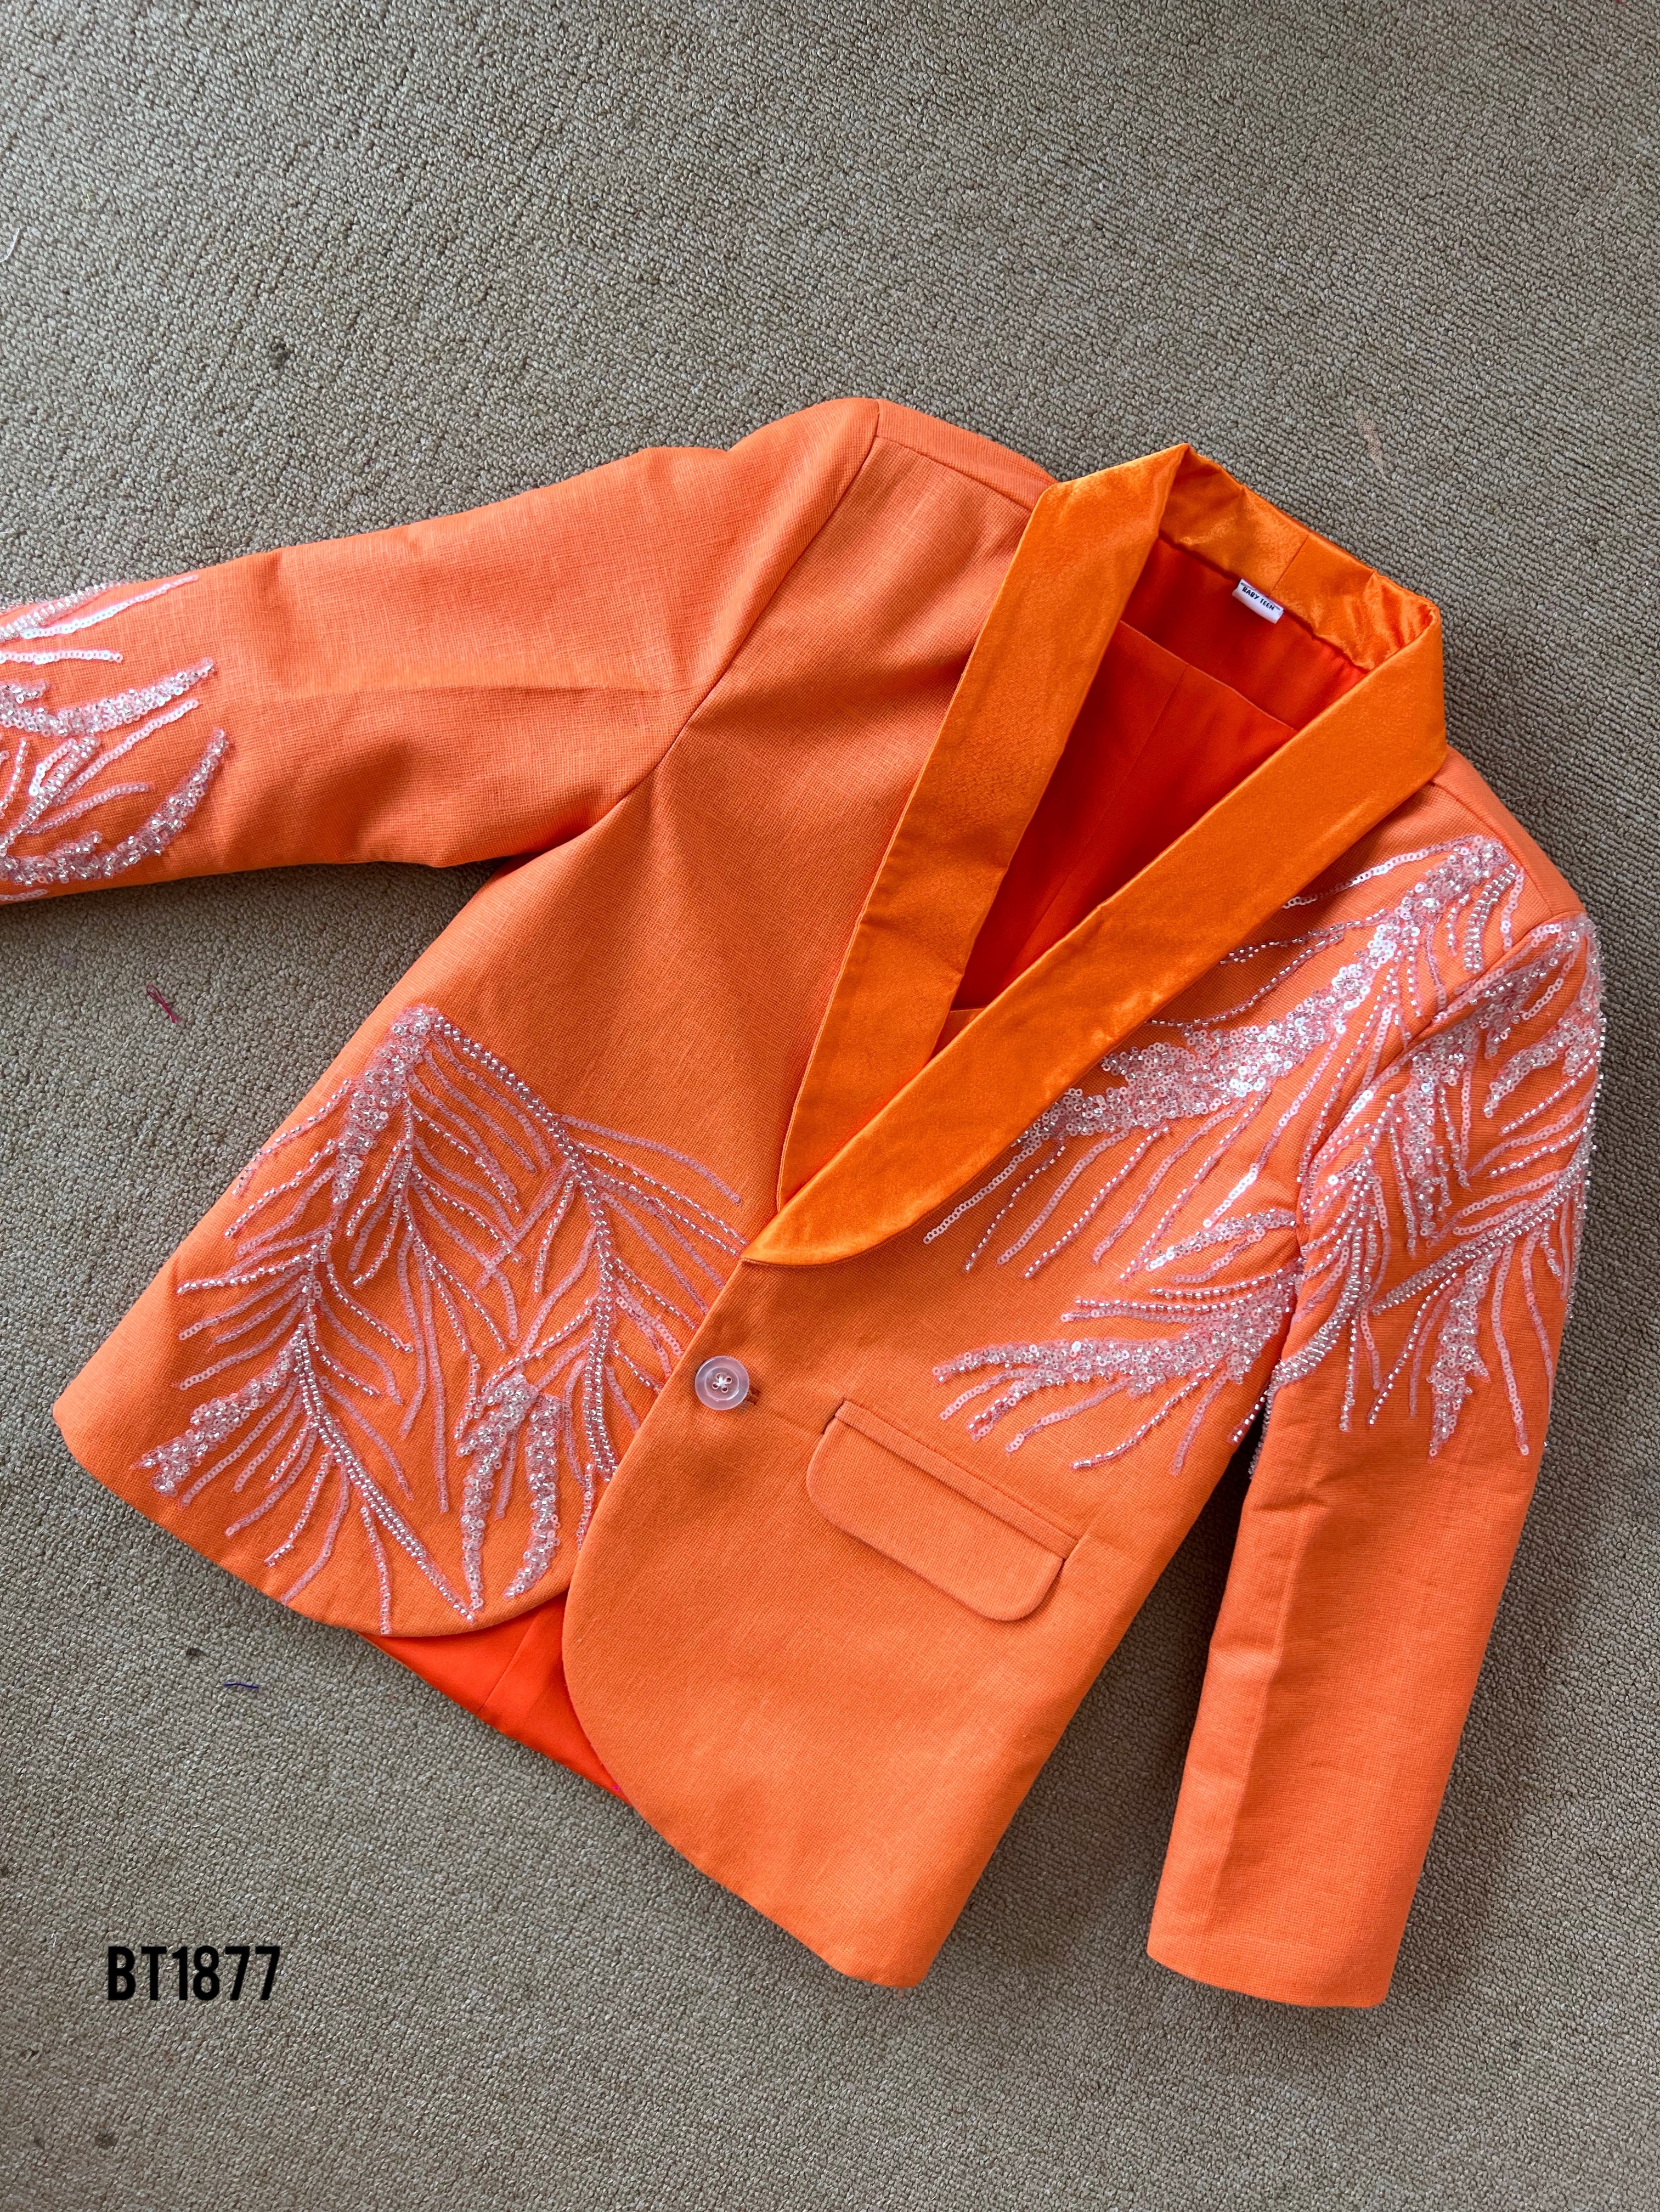 BT1877 Gleaming Coral - Embroidered Boys' Blazer